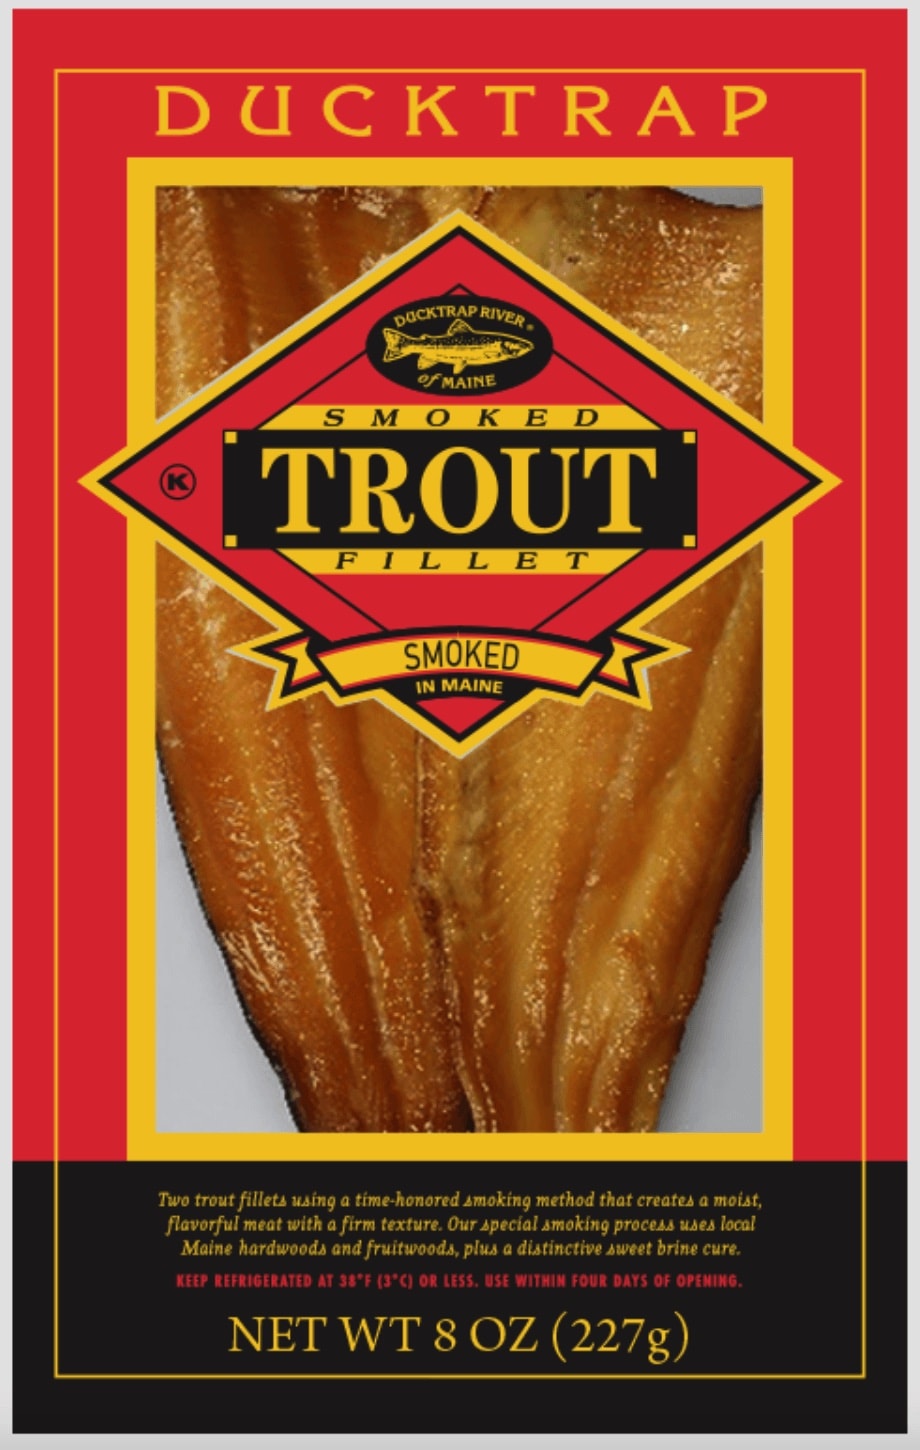 Smoked Trout Filet